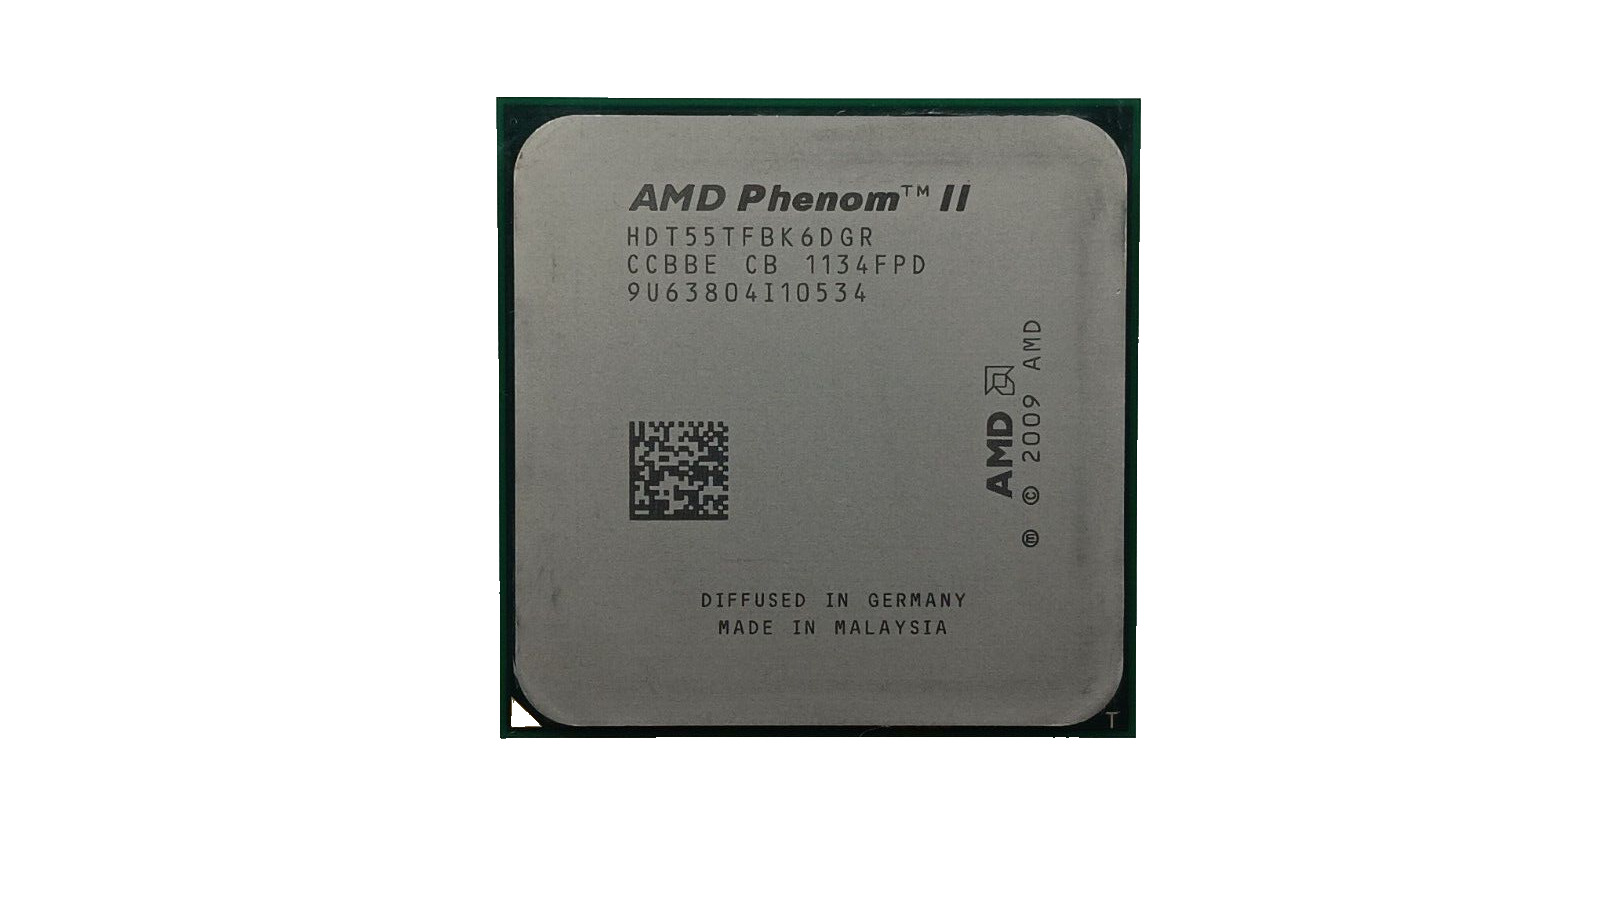 AMD Phenom II X6 1055T 6-Core 2.80GHz 6MB L3 Cache Socket AM3 CPU HDT55TFBK6DGR